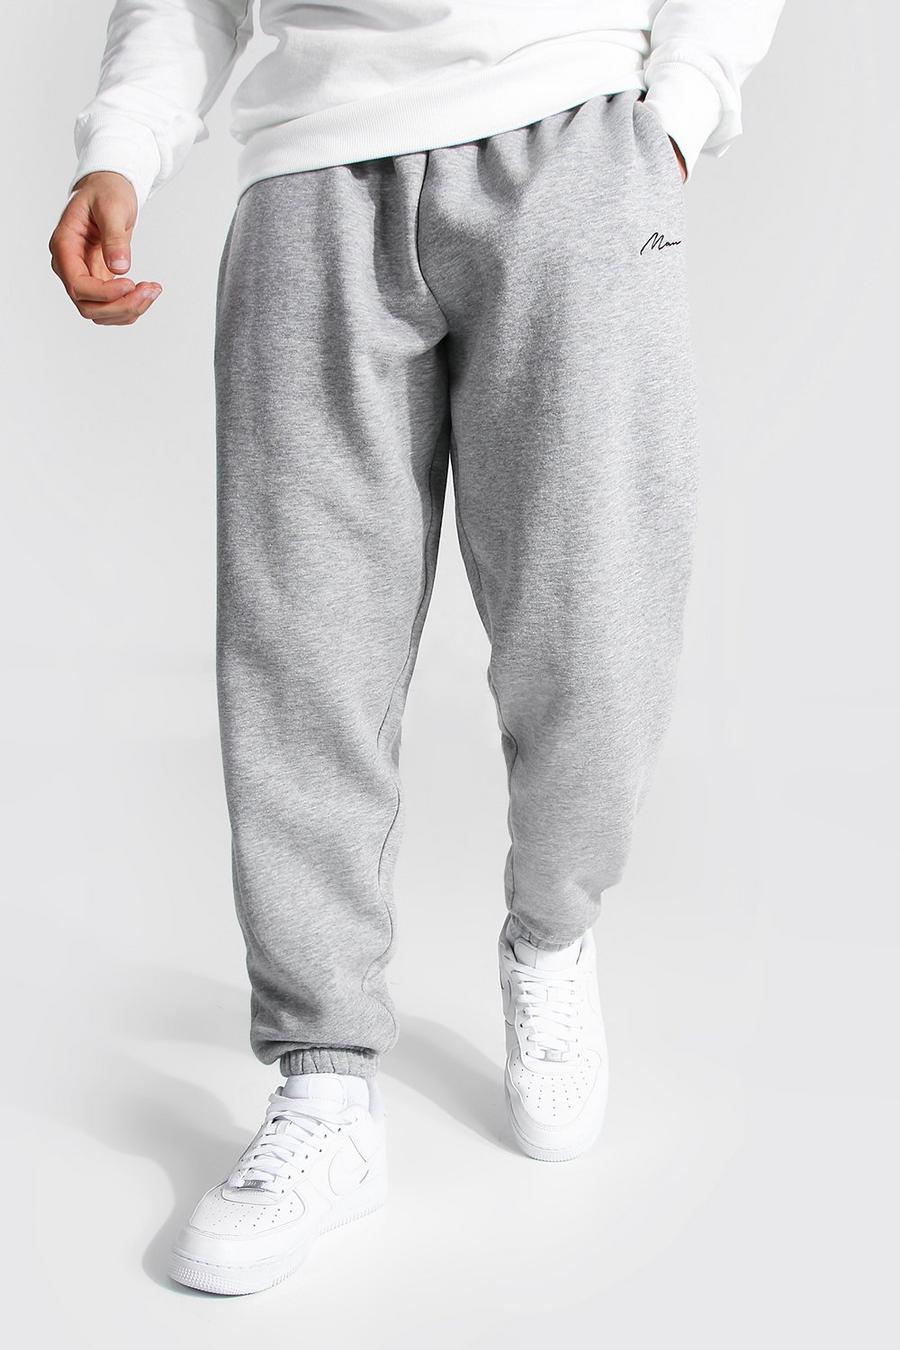 Pantaloni tuta taglio comodo con scritta Man, Grey marl image number 1